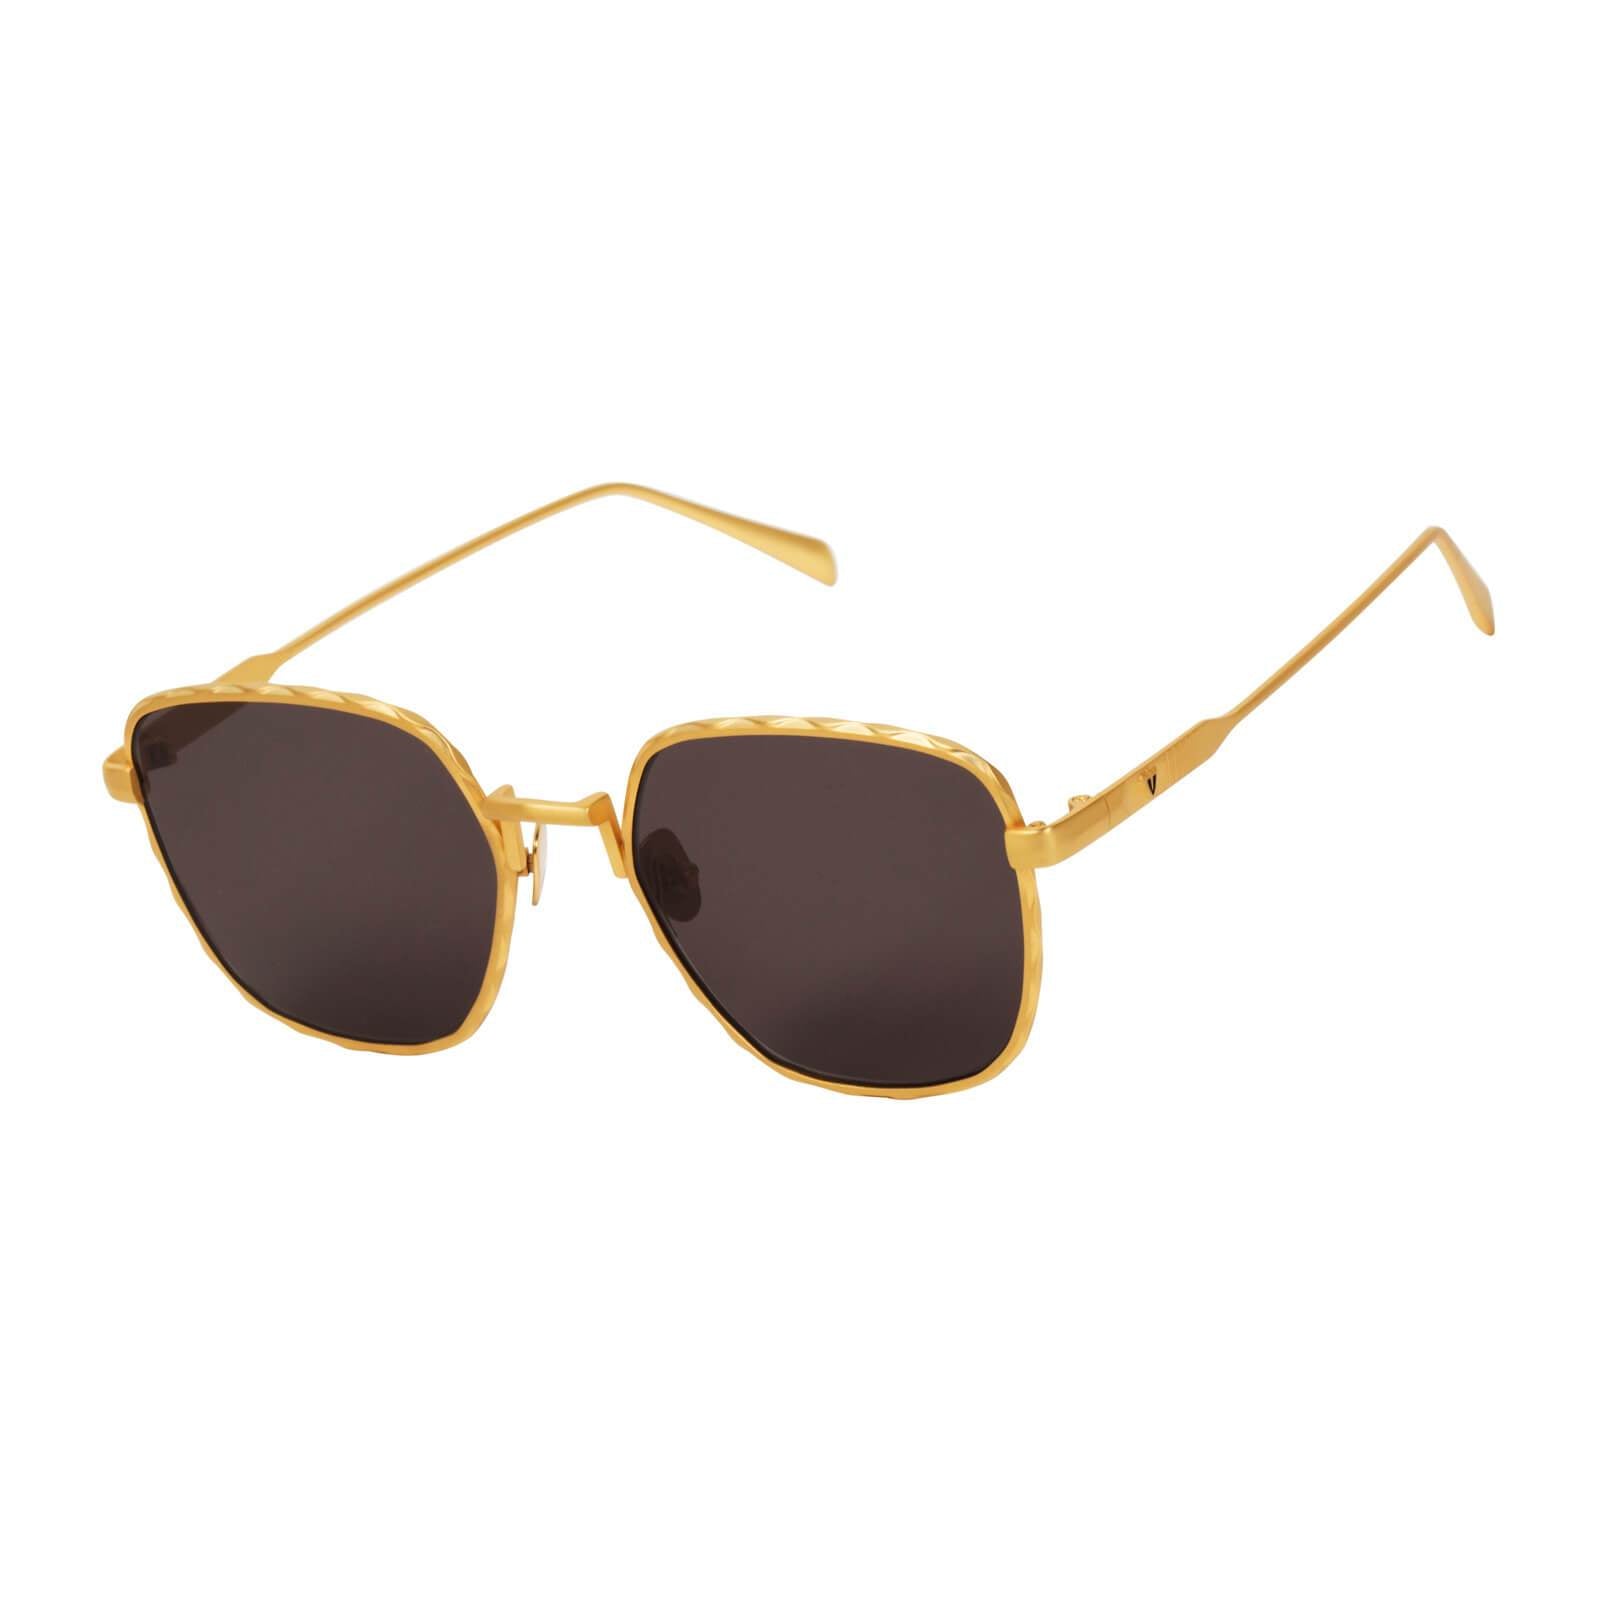 Dotan | Sunglasses - Brushed Gold Titanium / Black Lens